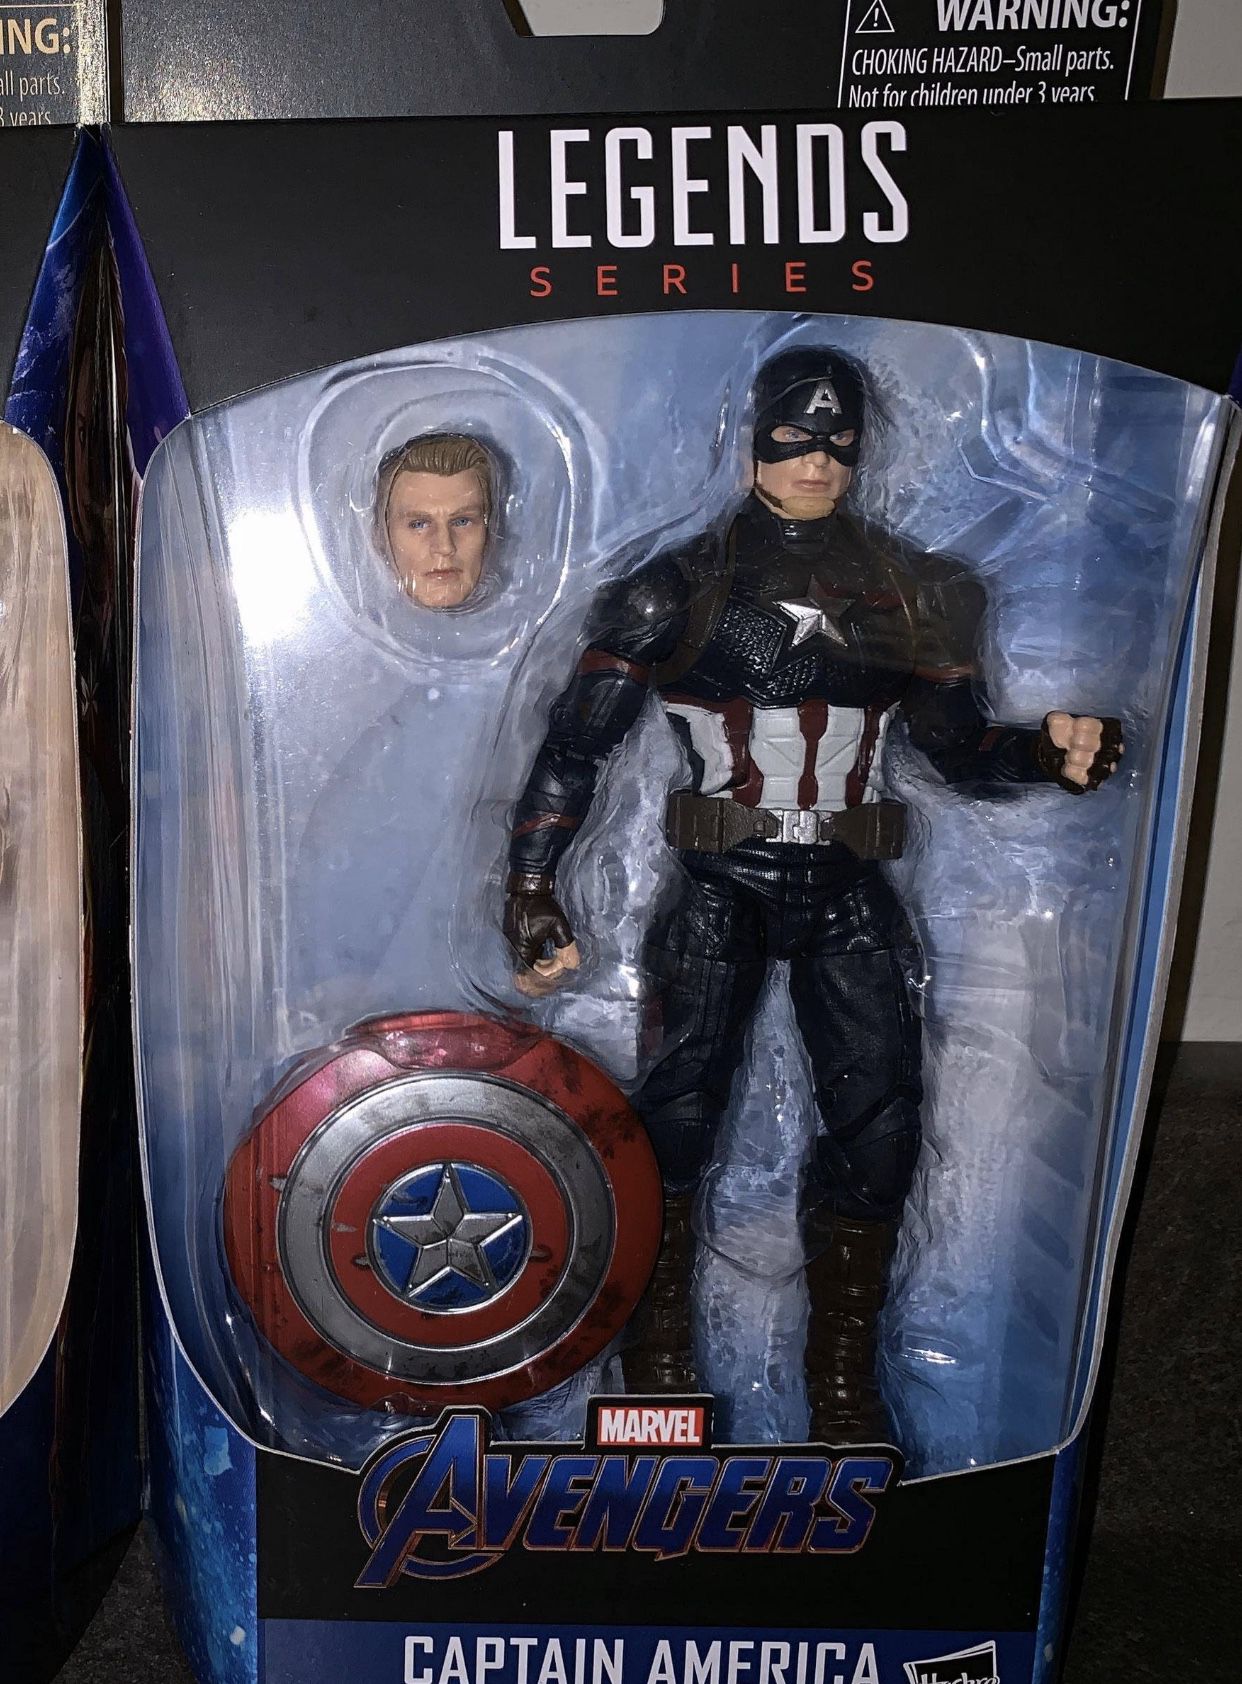 Worthy Captain America figure